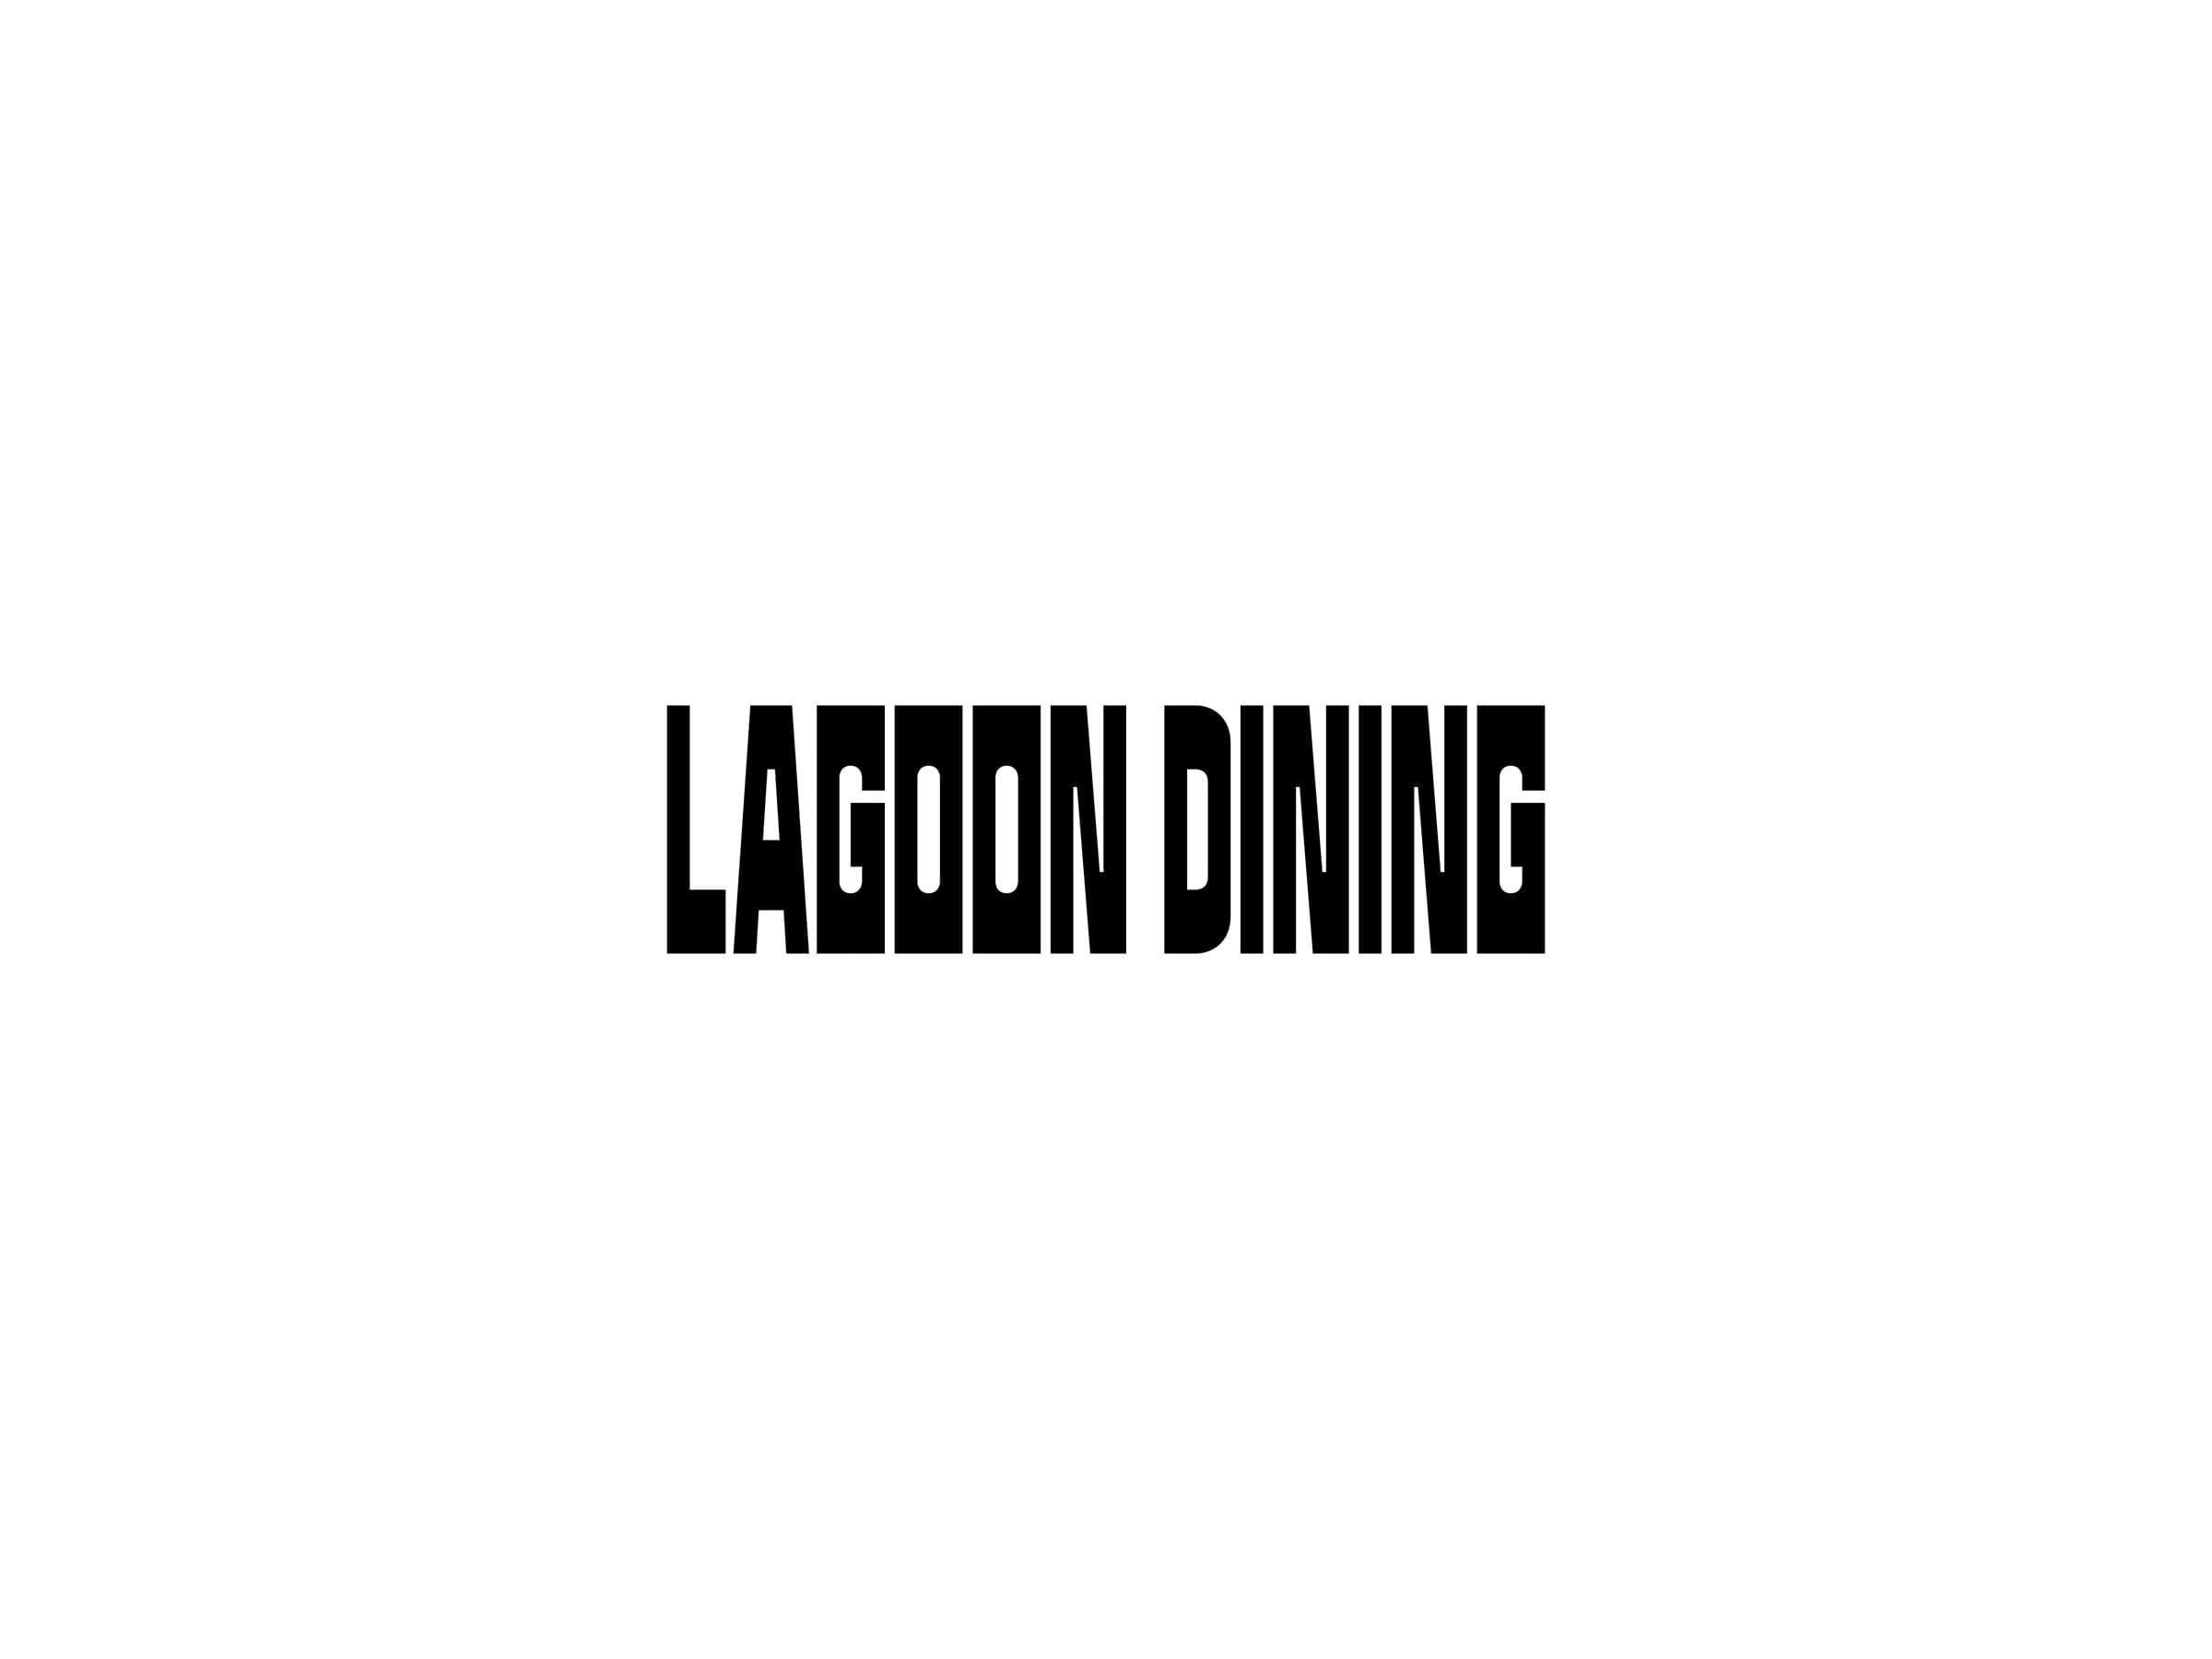 Lagoon Dining